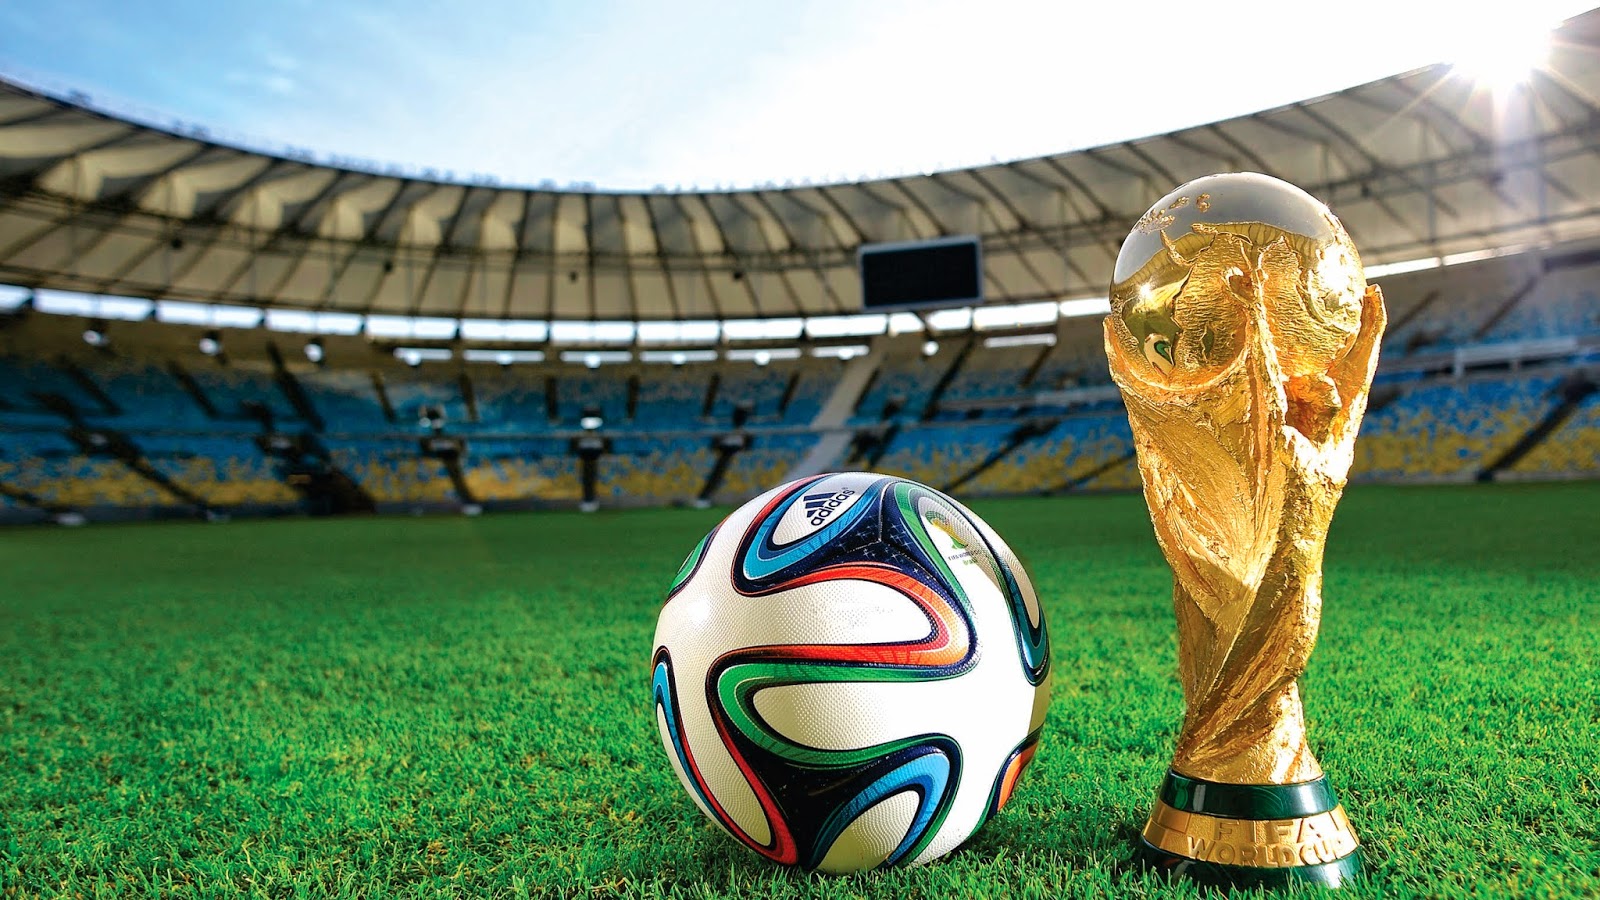 Fifa World Cup Wallpaper